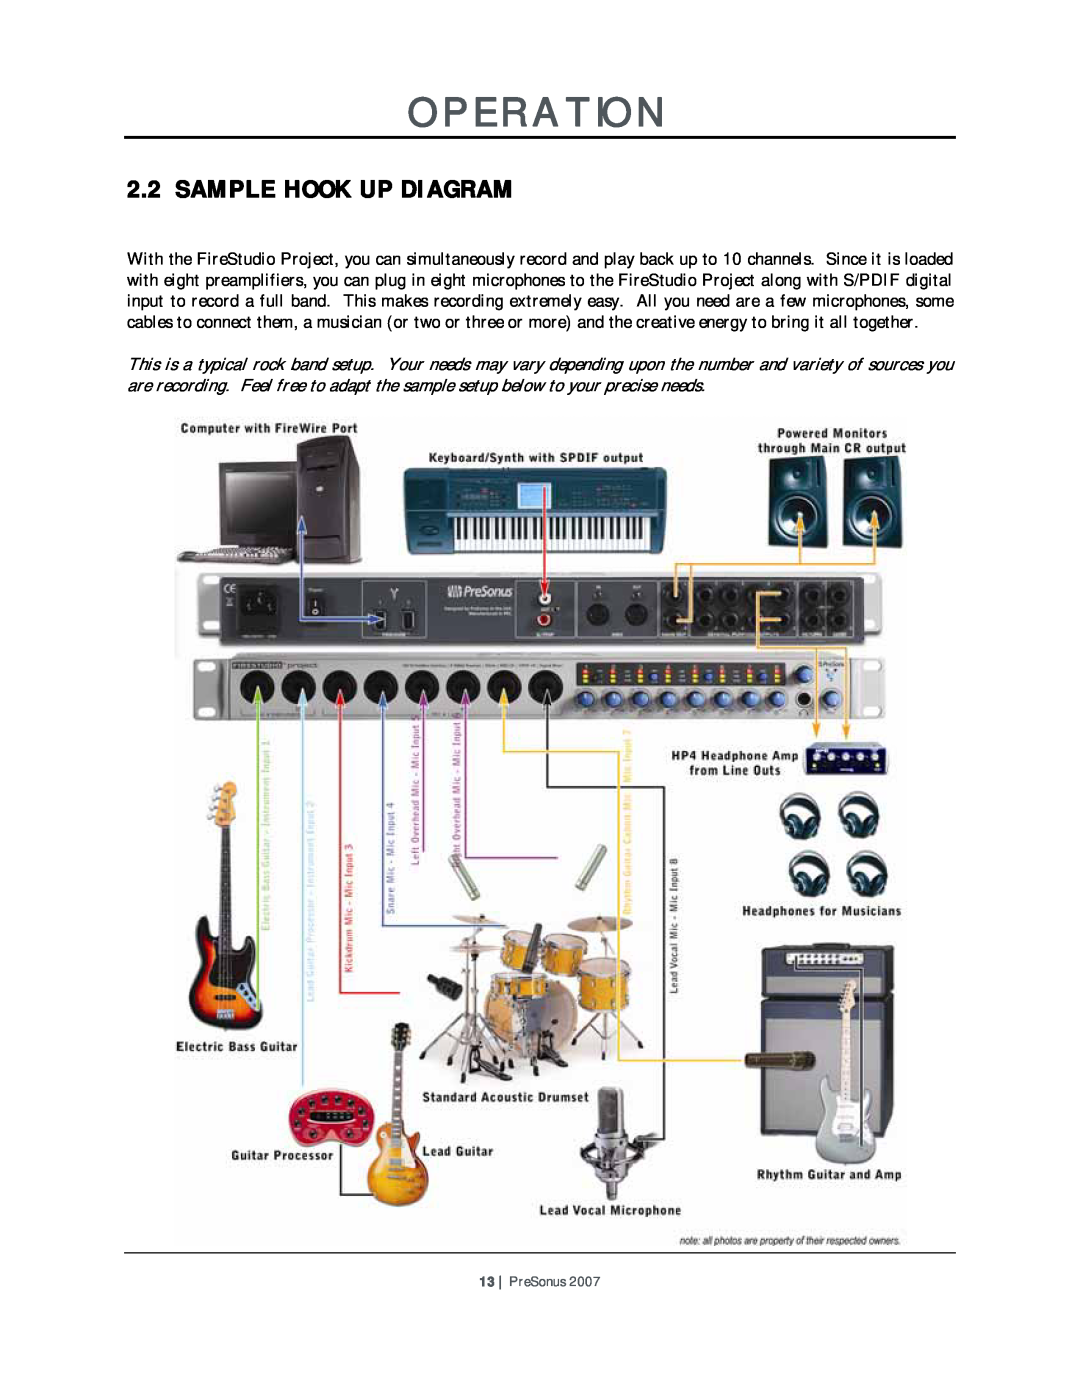 Presonus Audio electronic Version 1.0 user manual Sample Hook Up Diagram, Operation, PreSonus 